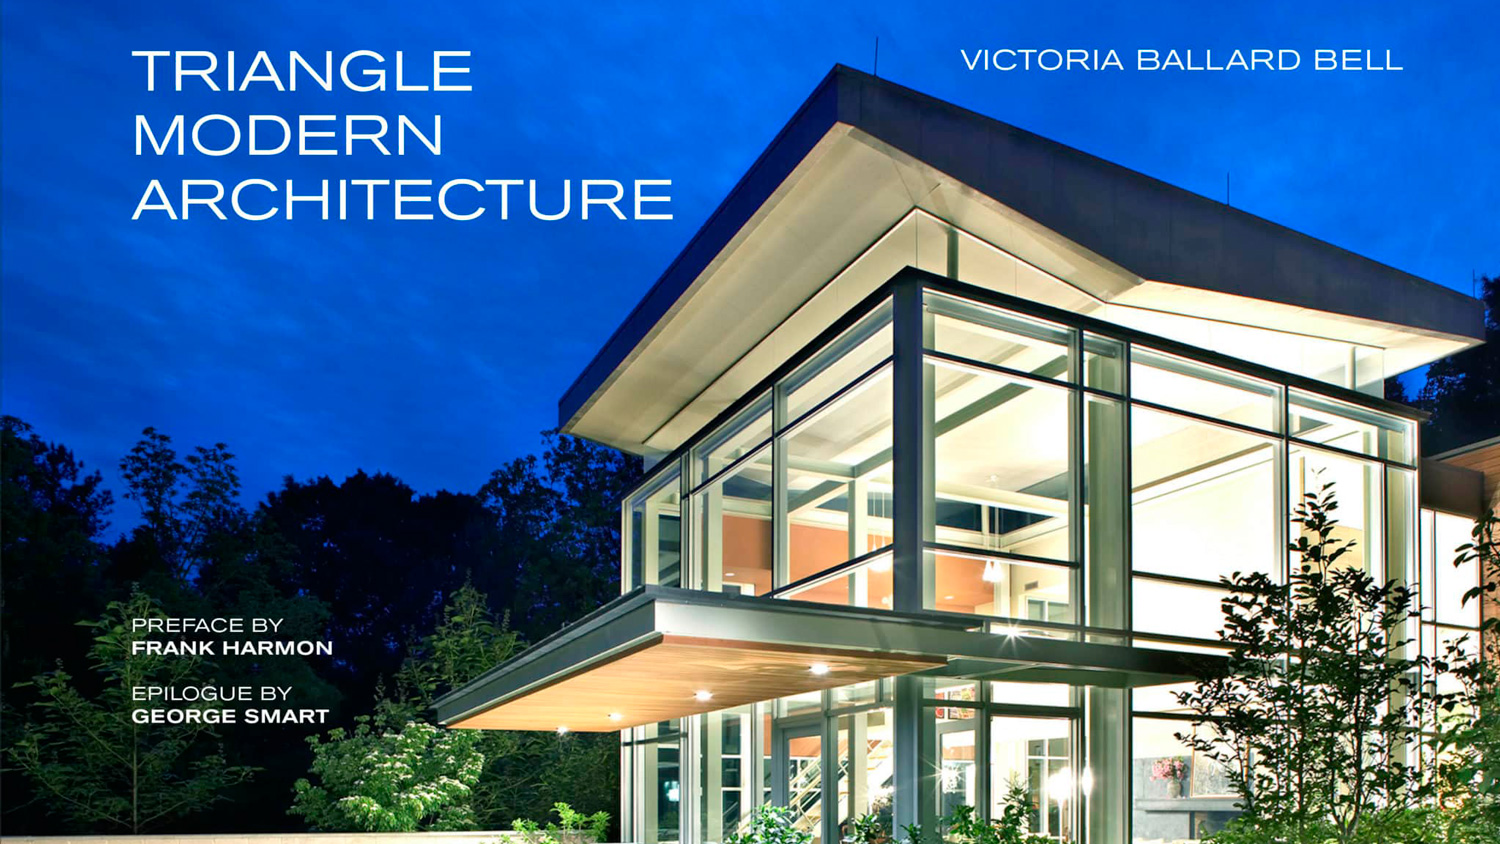 Triangle Modern Architecture by Victoria Ballard Bell